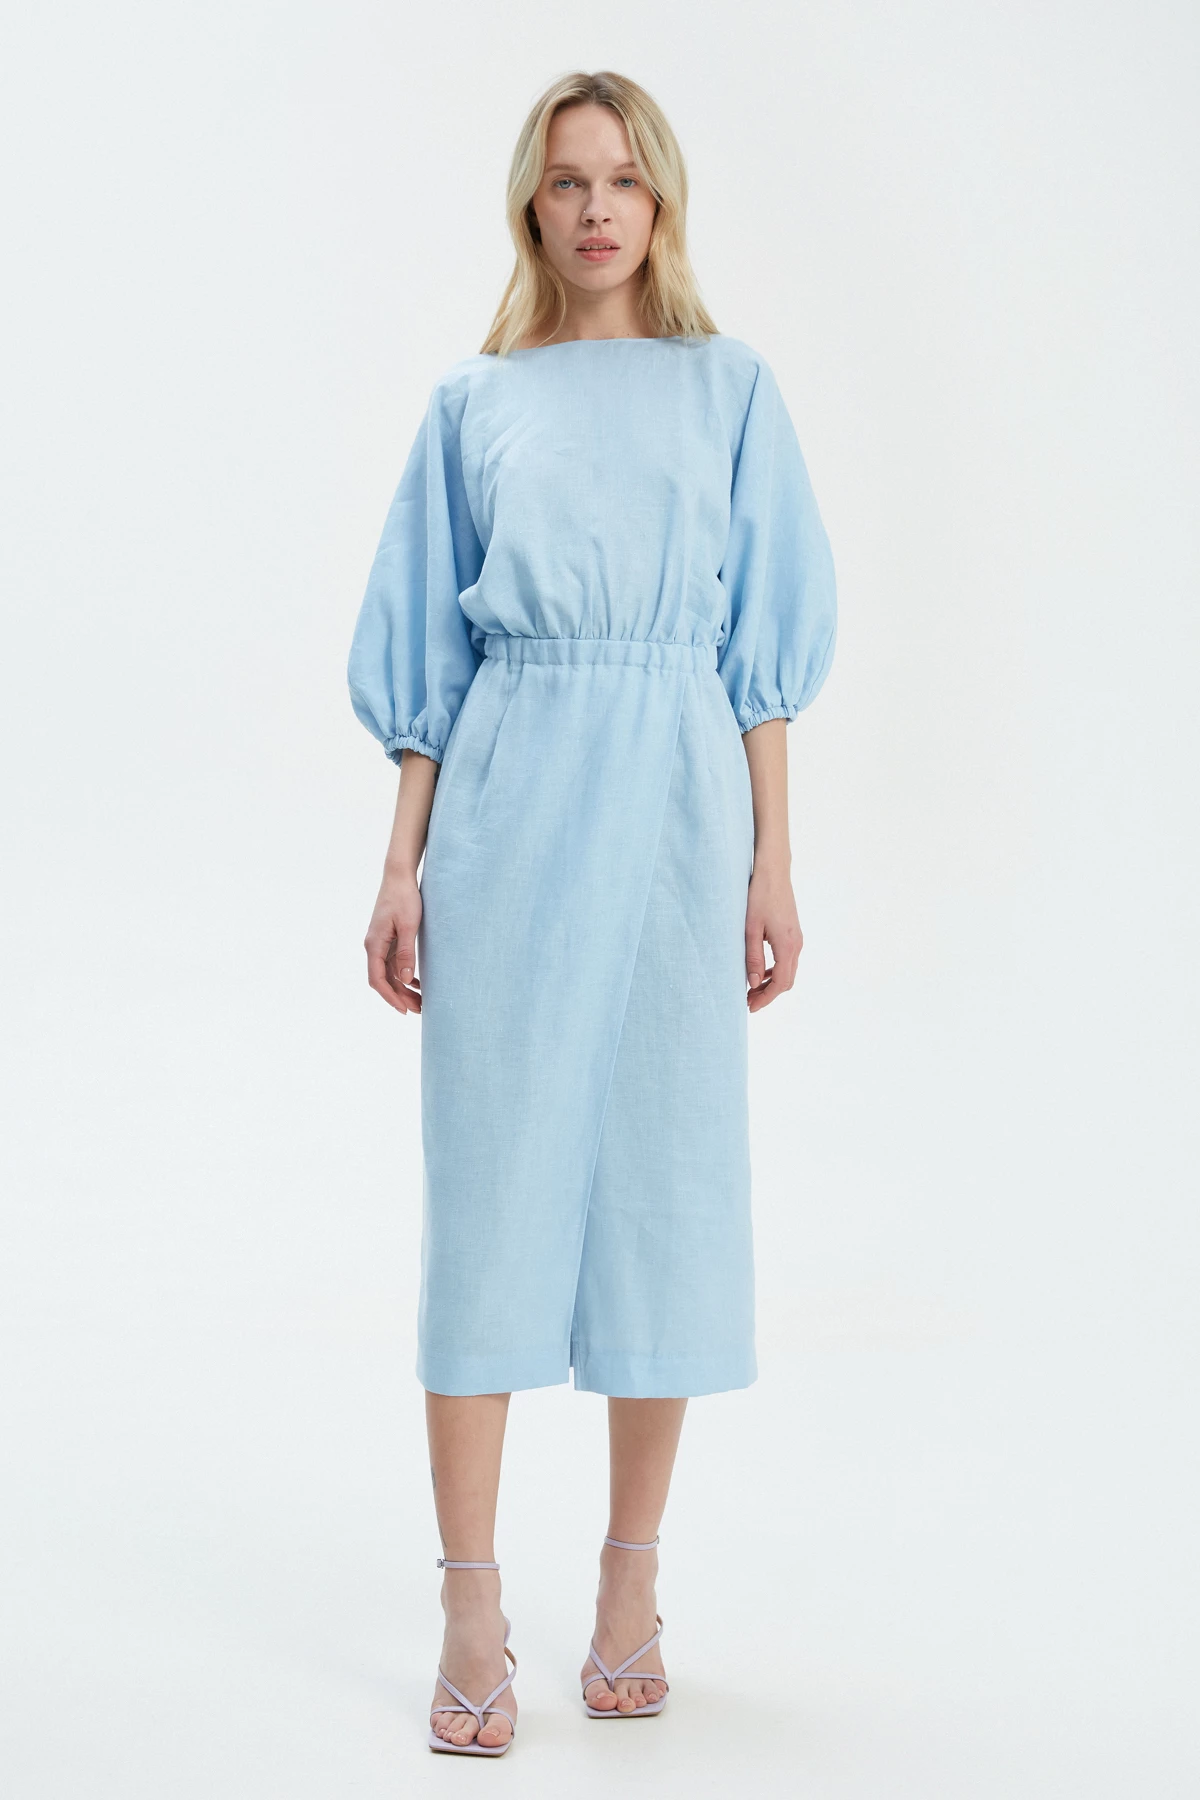 Blue linen midi dress with voluminous top, photo 2